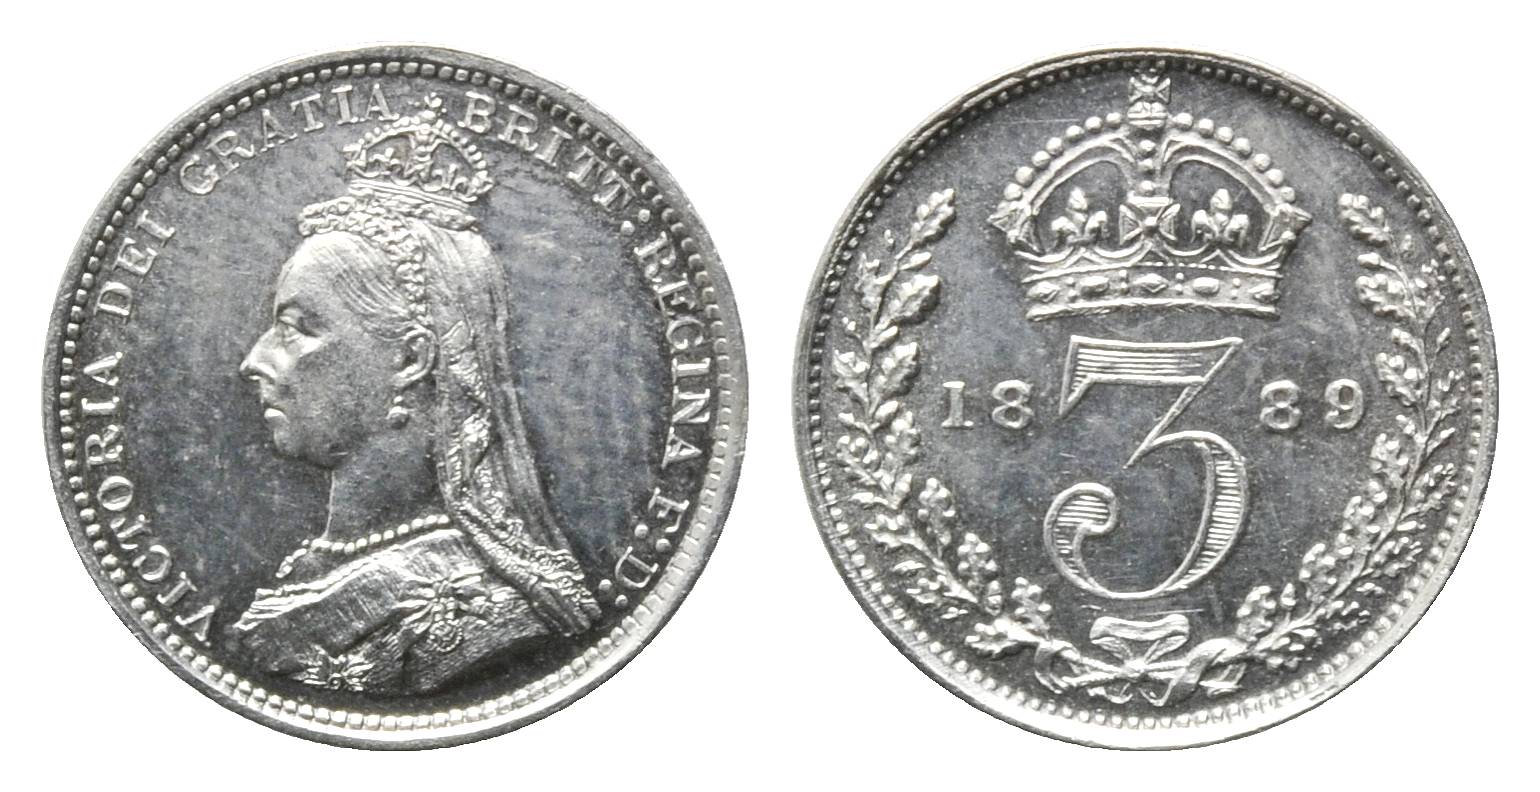 Foto Grossbritannien, 3 Pence 1889, foto 127726